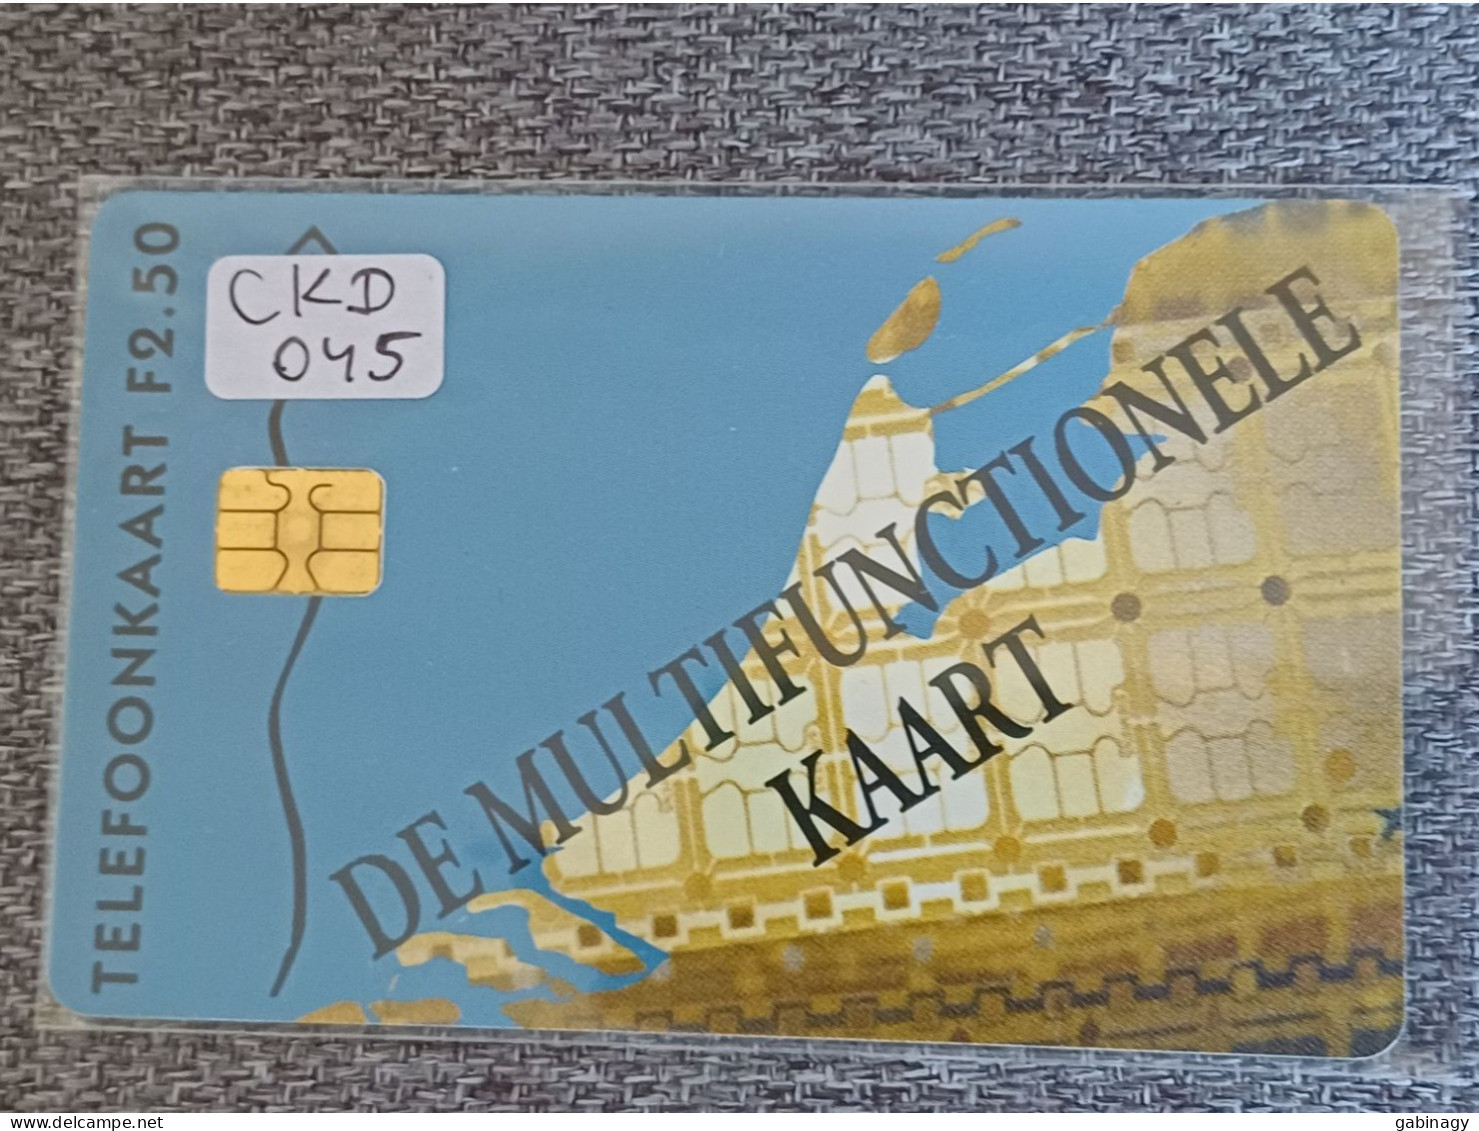 NETHERLANDS - CKD045 - National Chipcard Congress - 4.600EX. - Privat